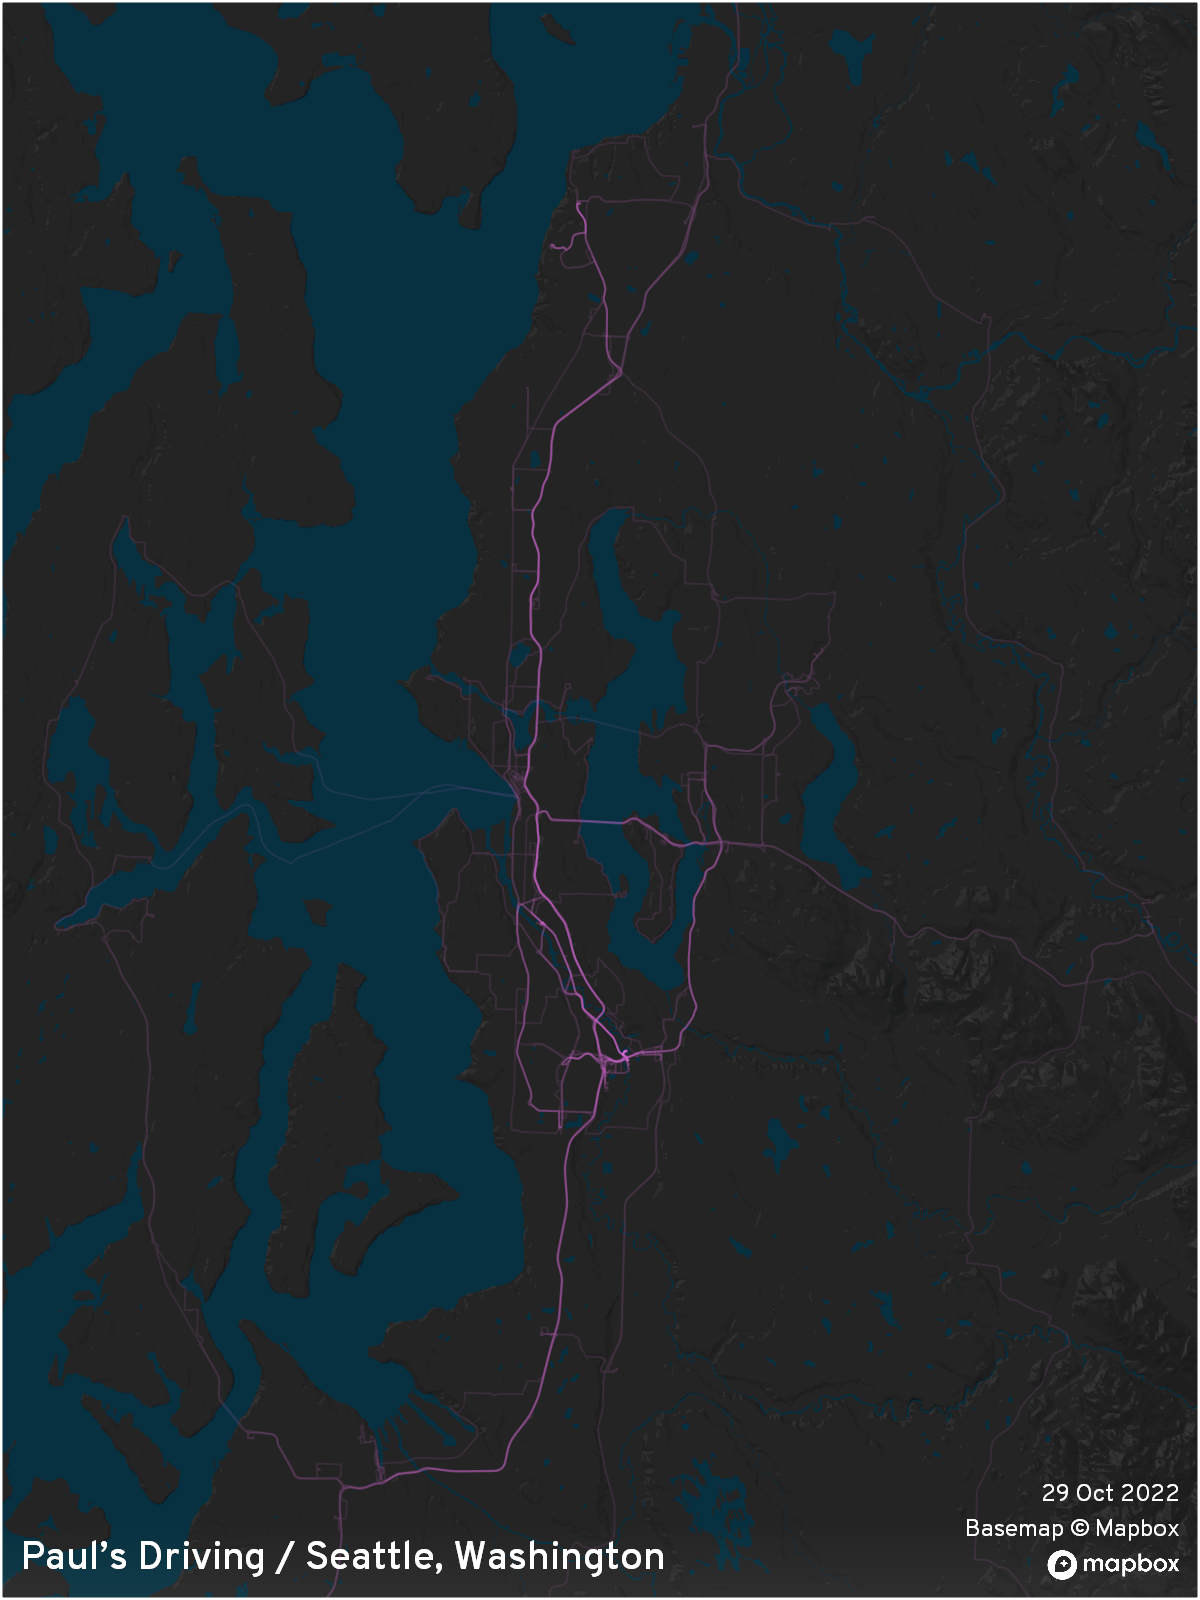 Driving density map of Seattle, Washington as of 29 Oct 2022.